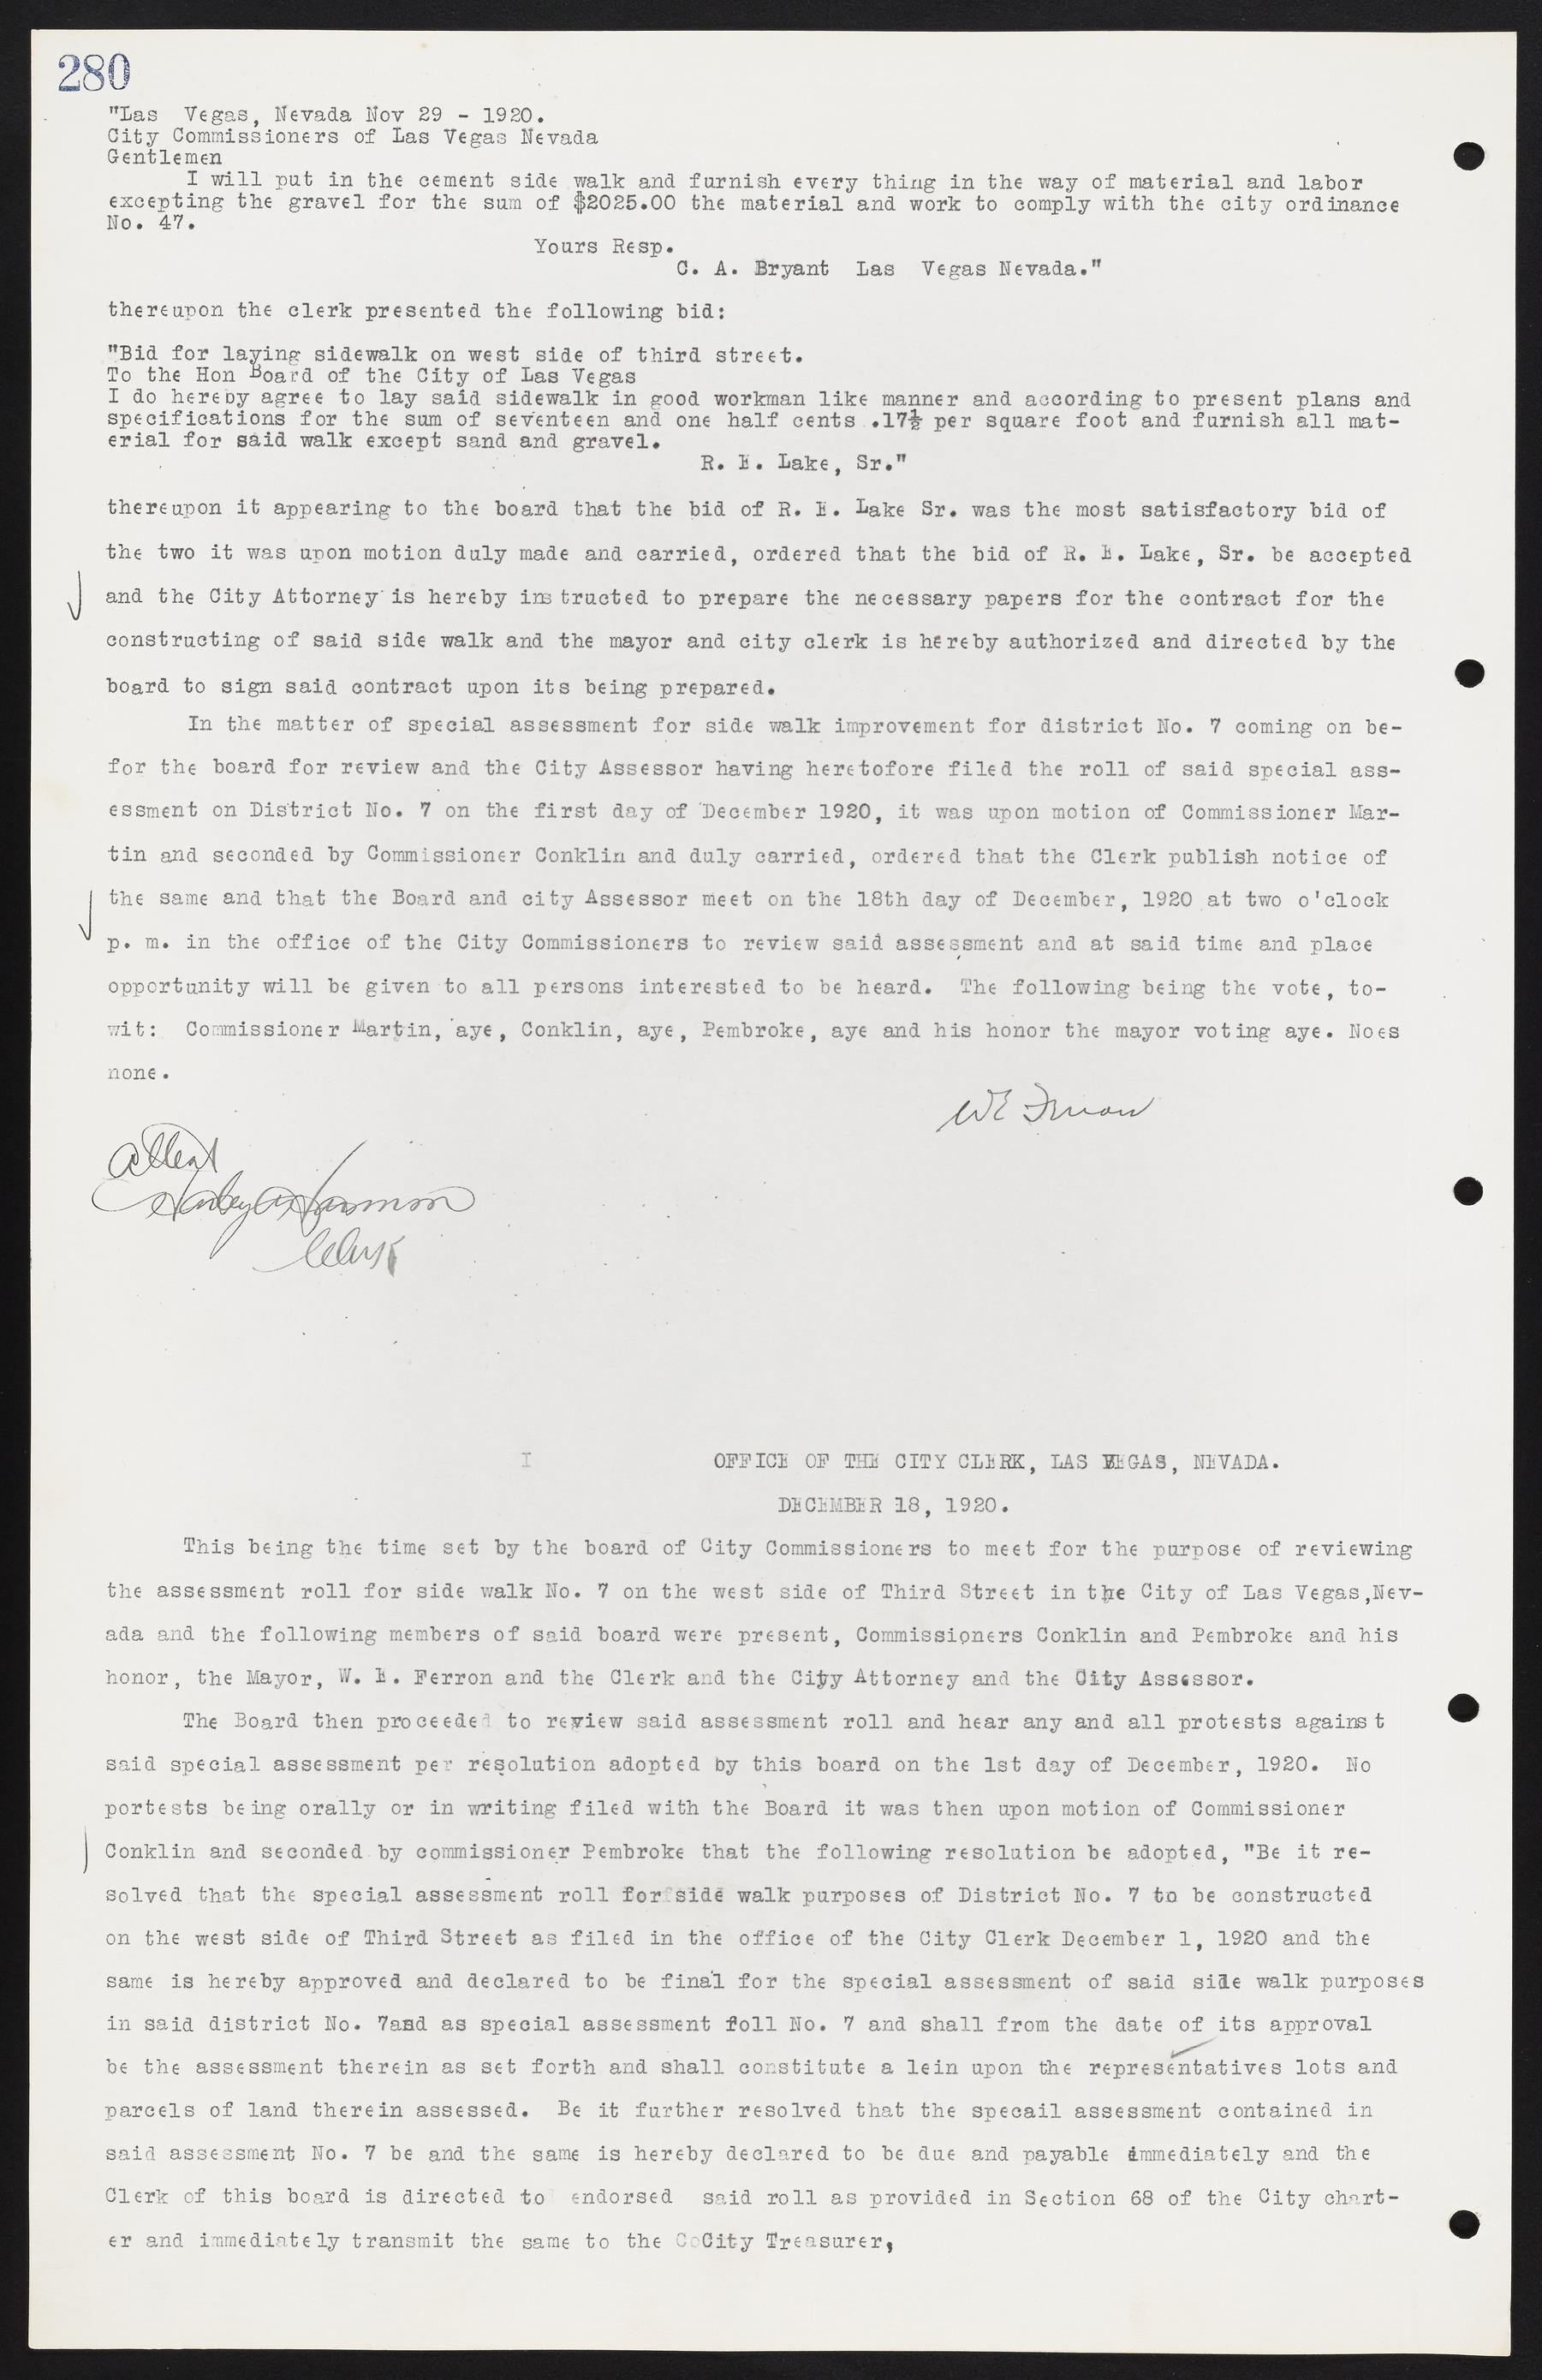 Las Vegas City Commission Minutes, June 22, 1911 to February 7, 1922, lvc000001-296